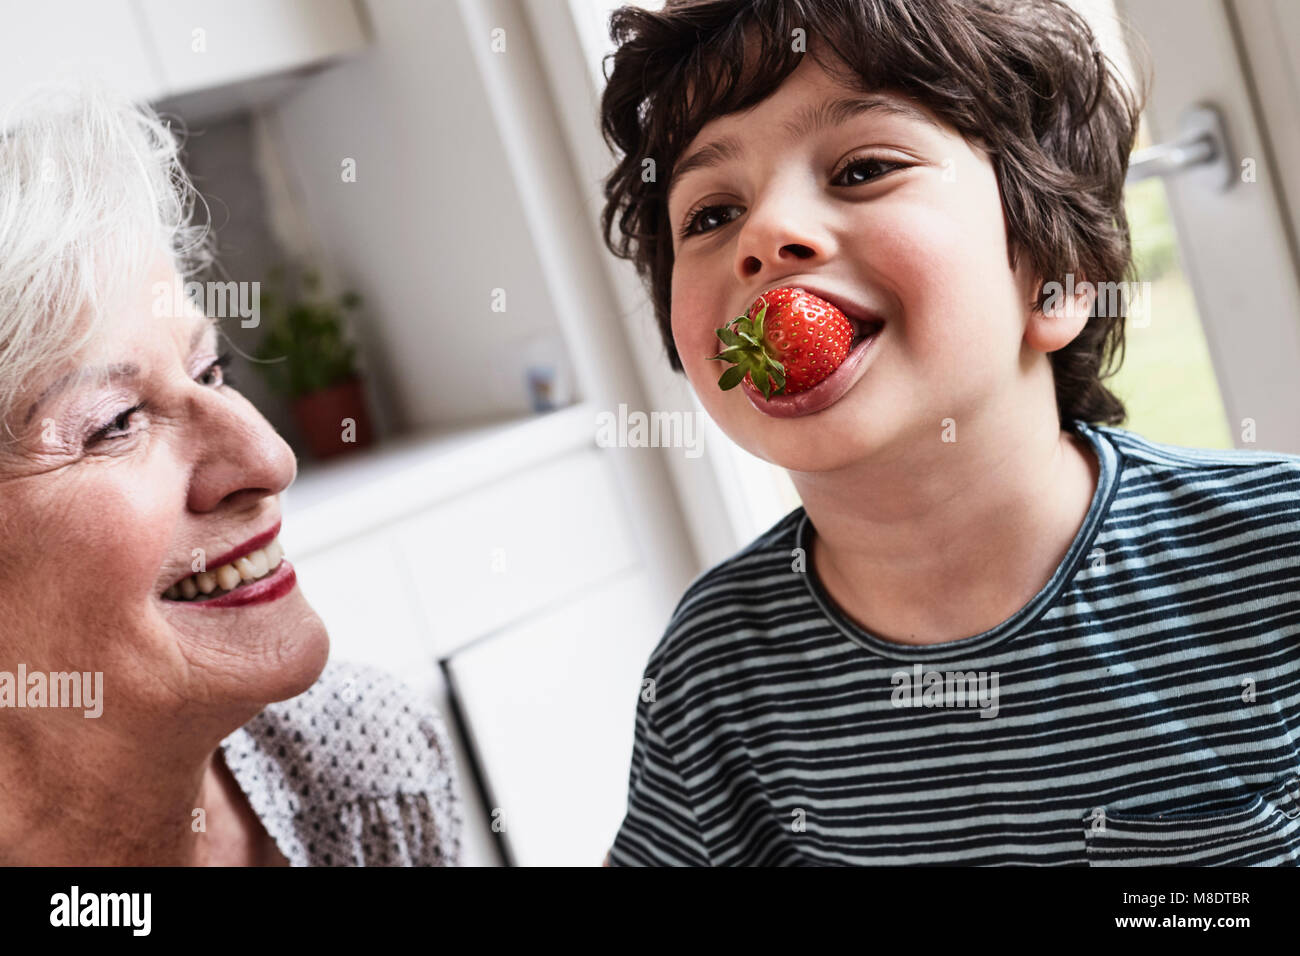 Grandson eating strawberry, grandmother sitting beside him, smiling Stock Photo